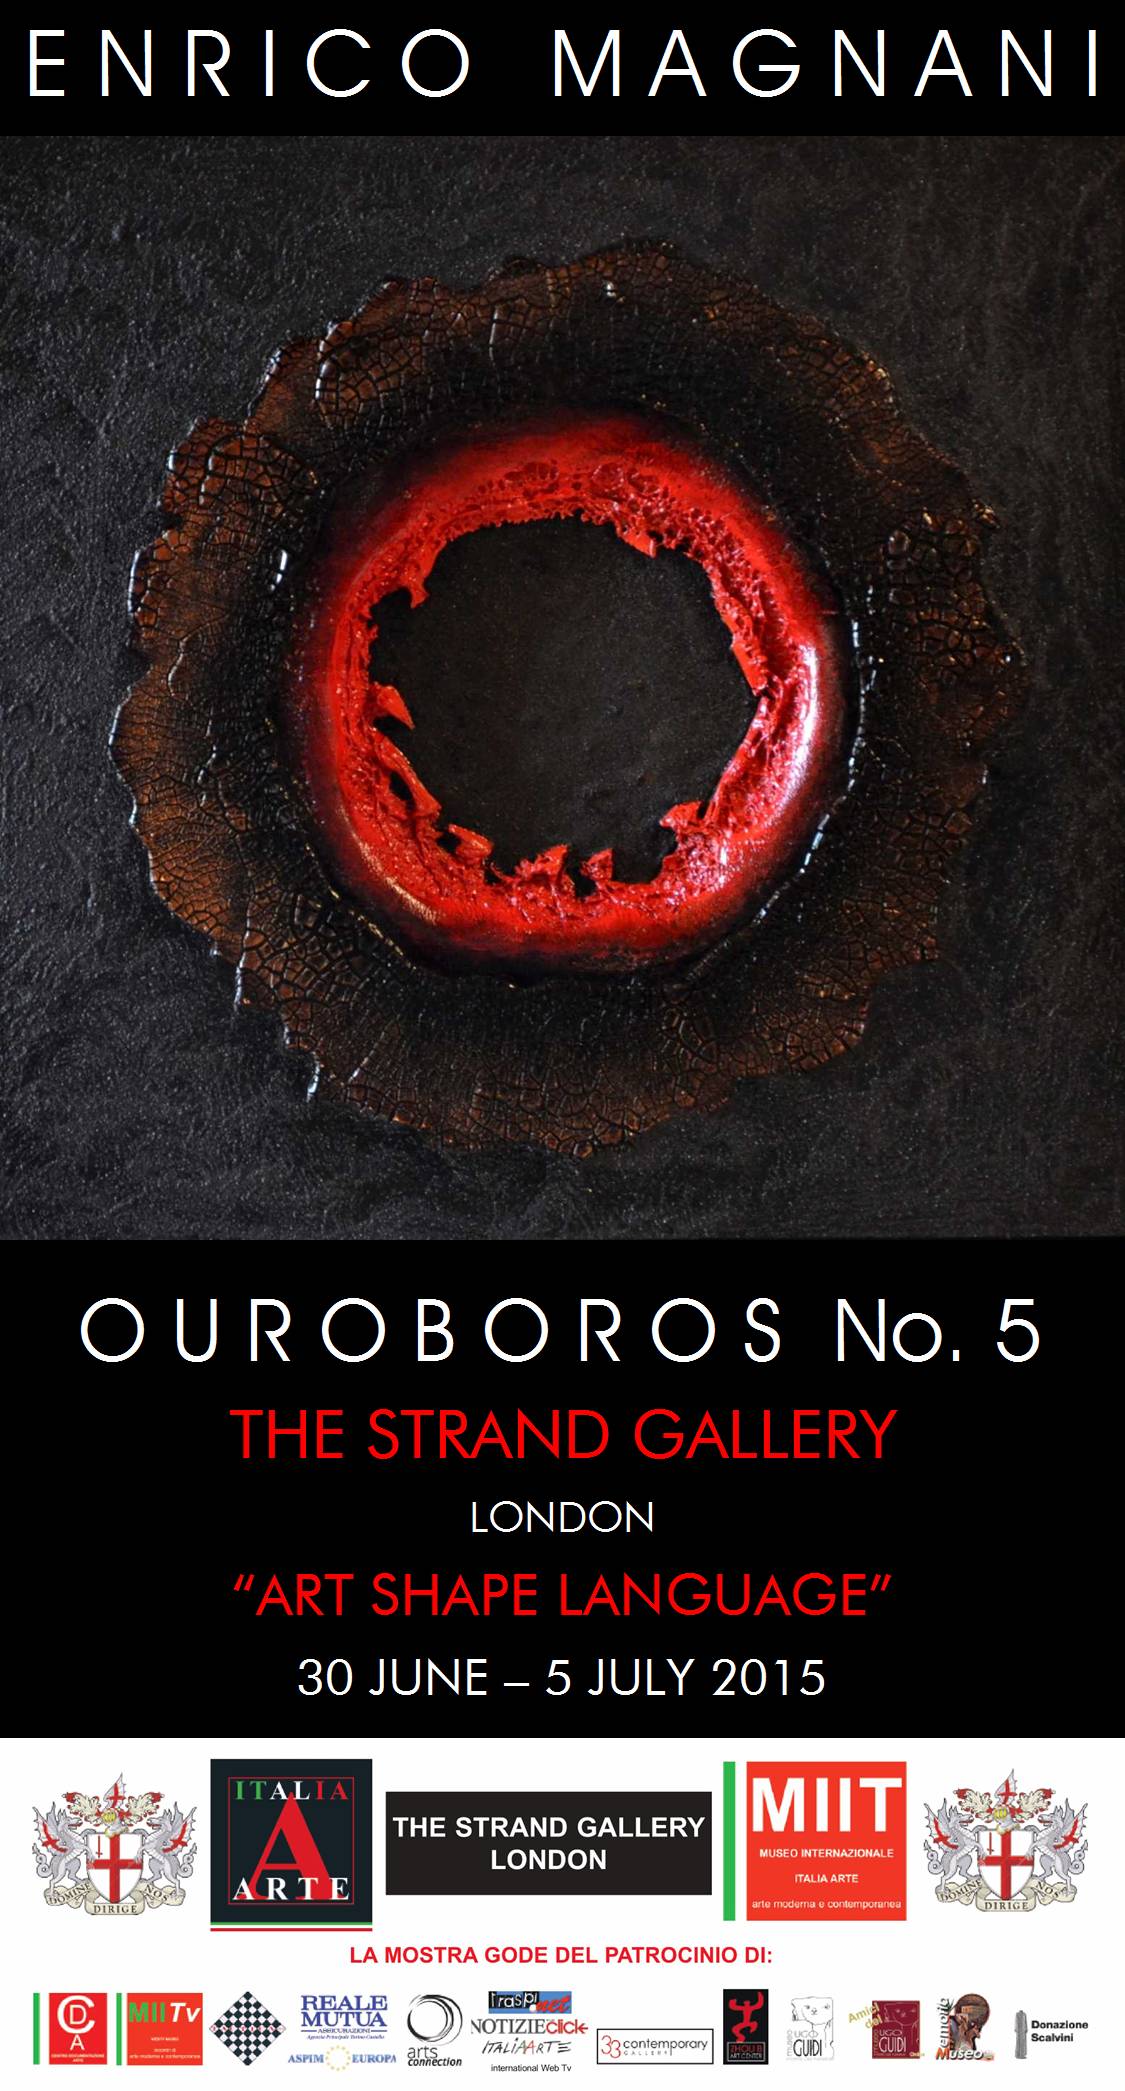 Enrico Magnani, OUROBOROS, art, london, londra, gallery, shape, language